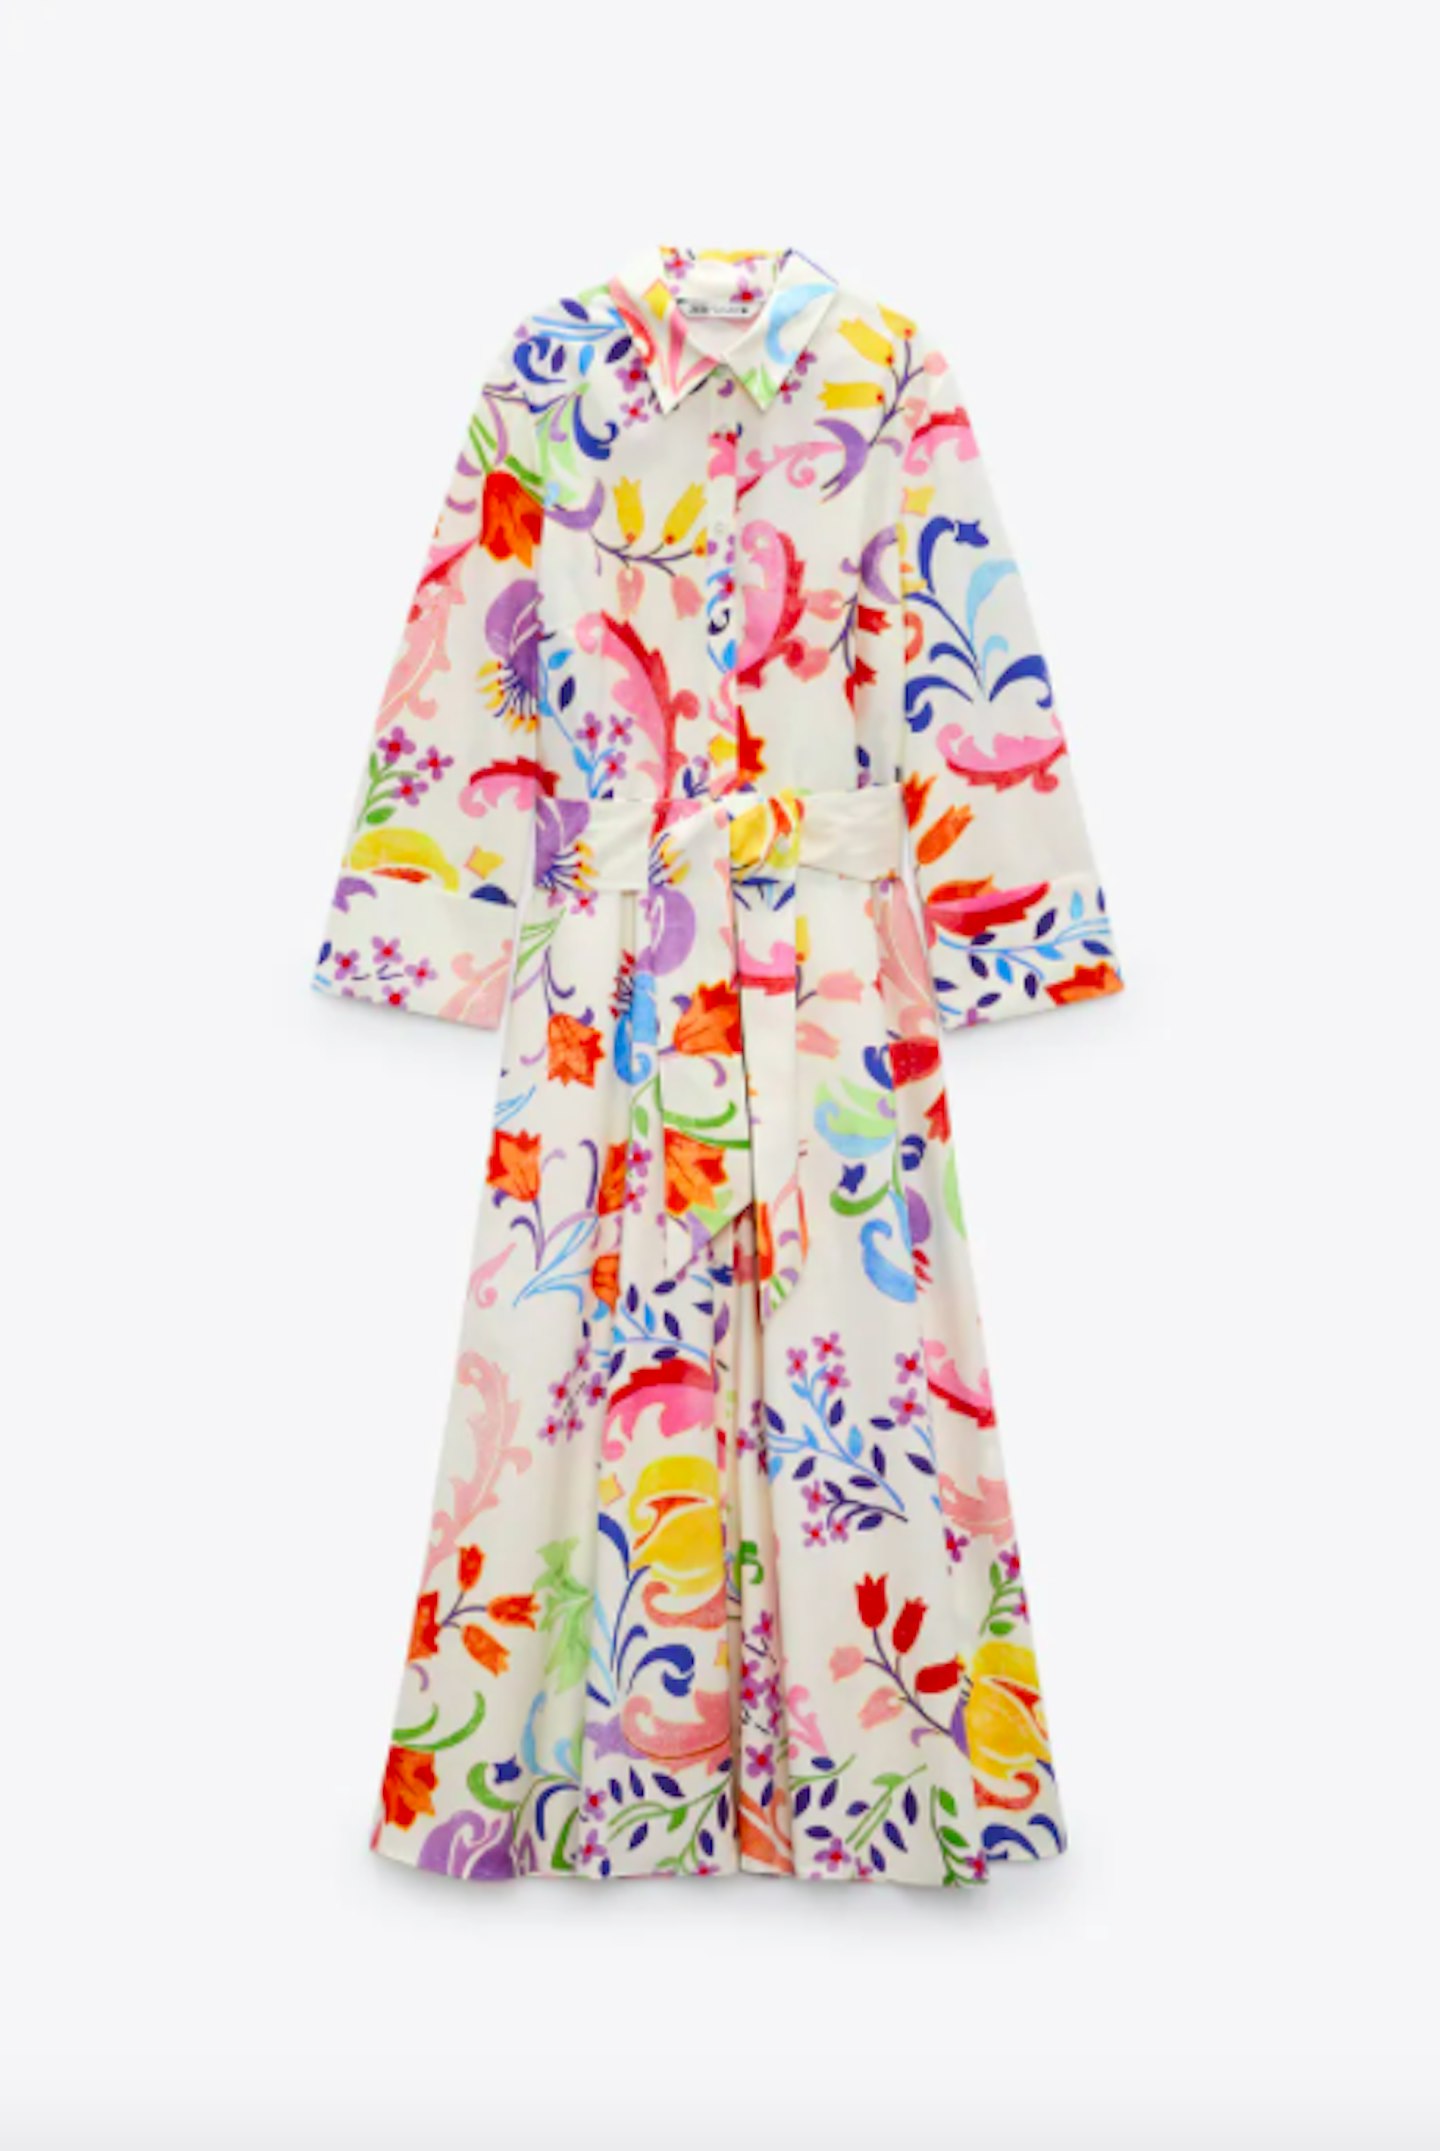 Zara, Button Down Dress, £49.99